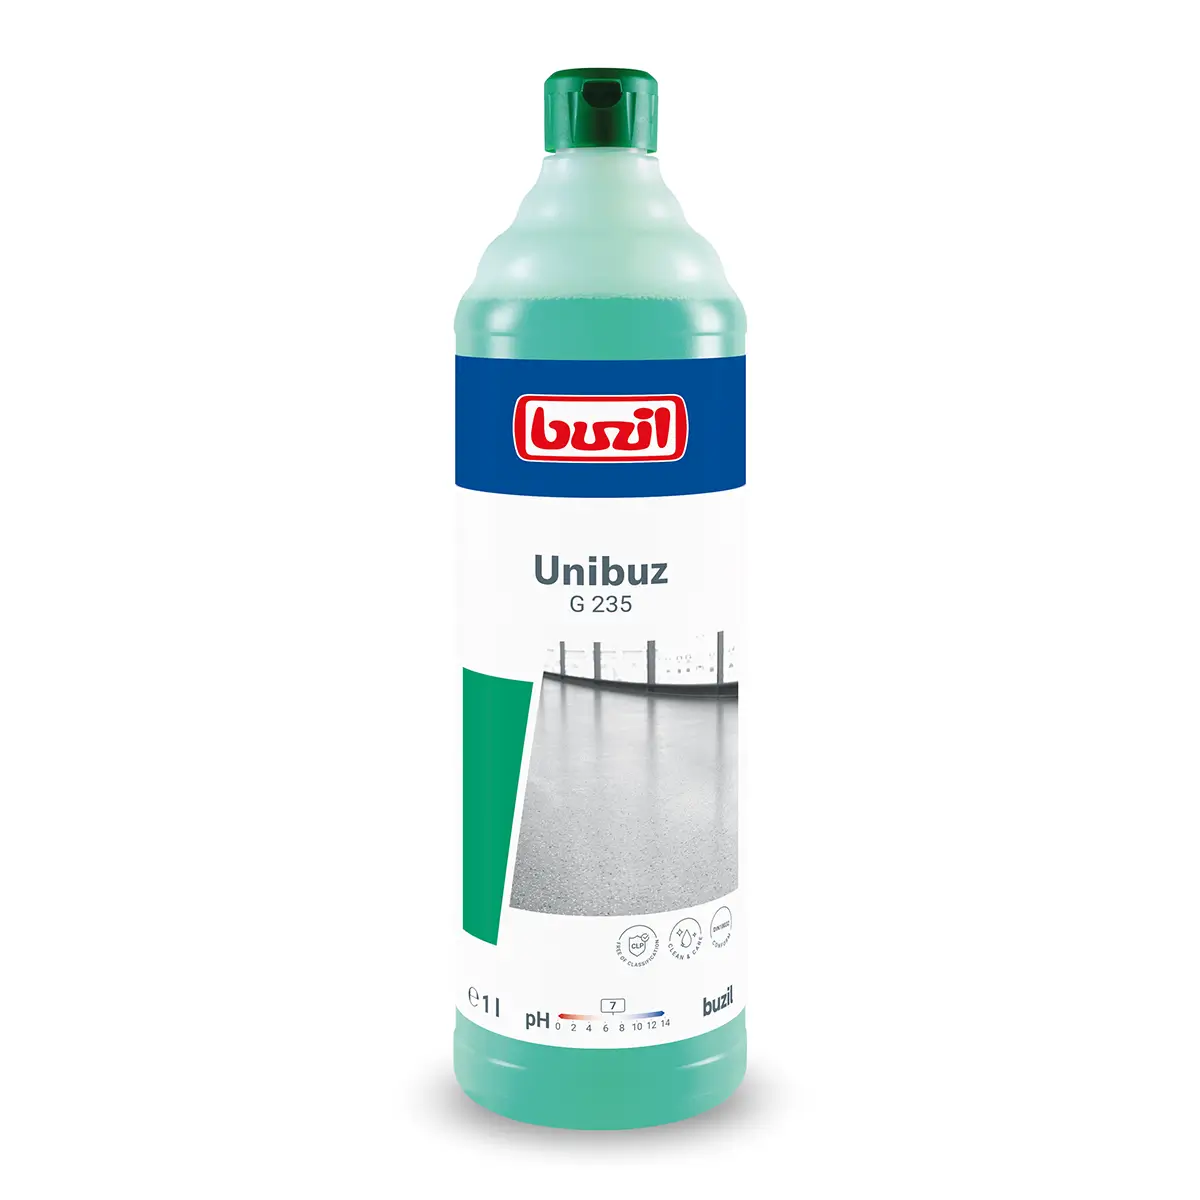 Buzil Unibuz G235 Wischpflege 1l